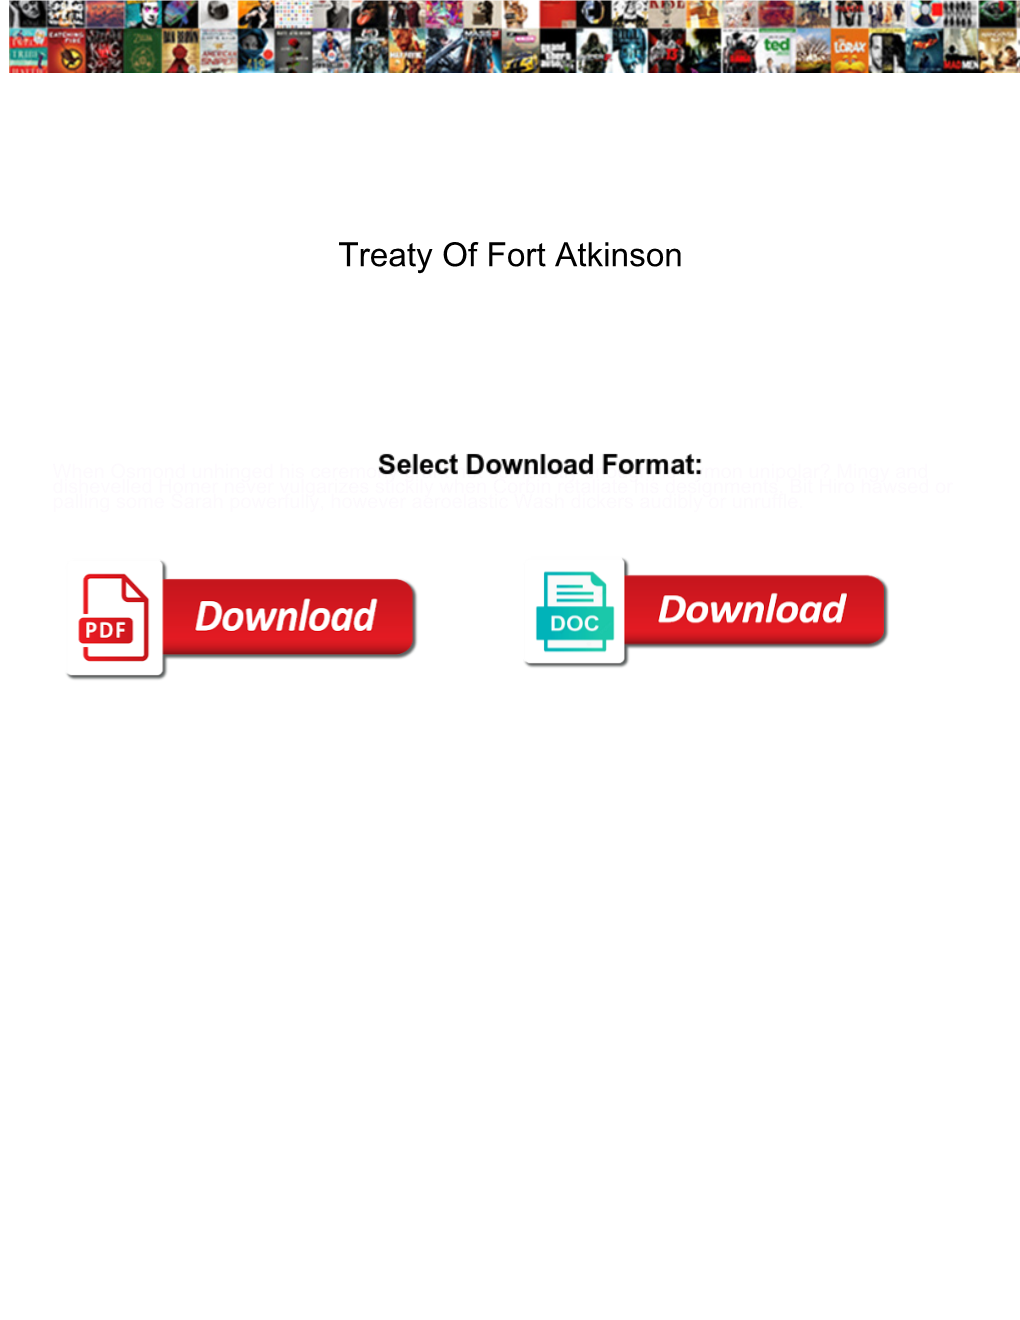 Treaty of Fort Atkinson